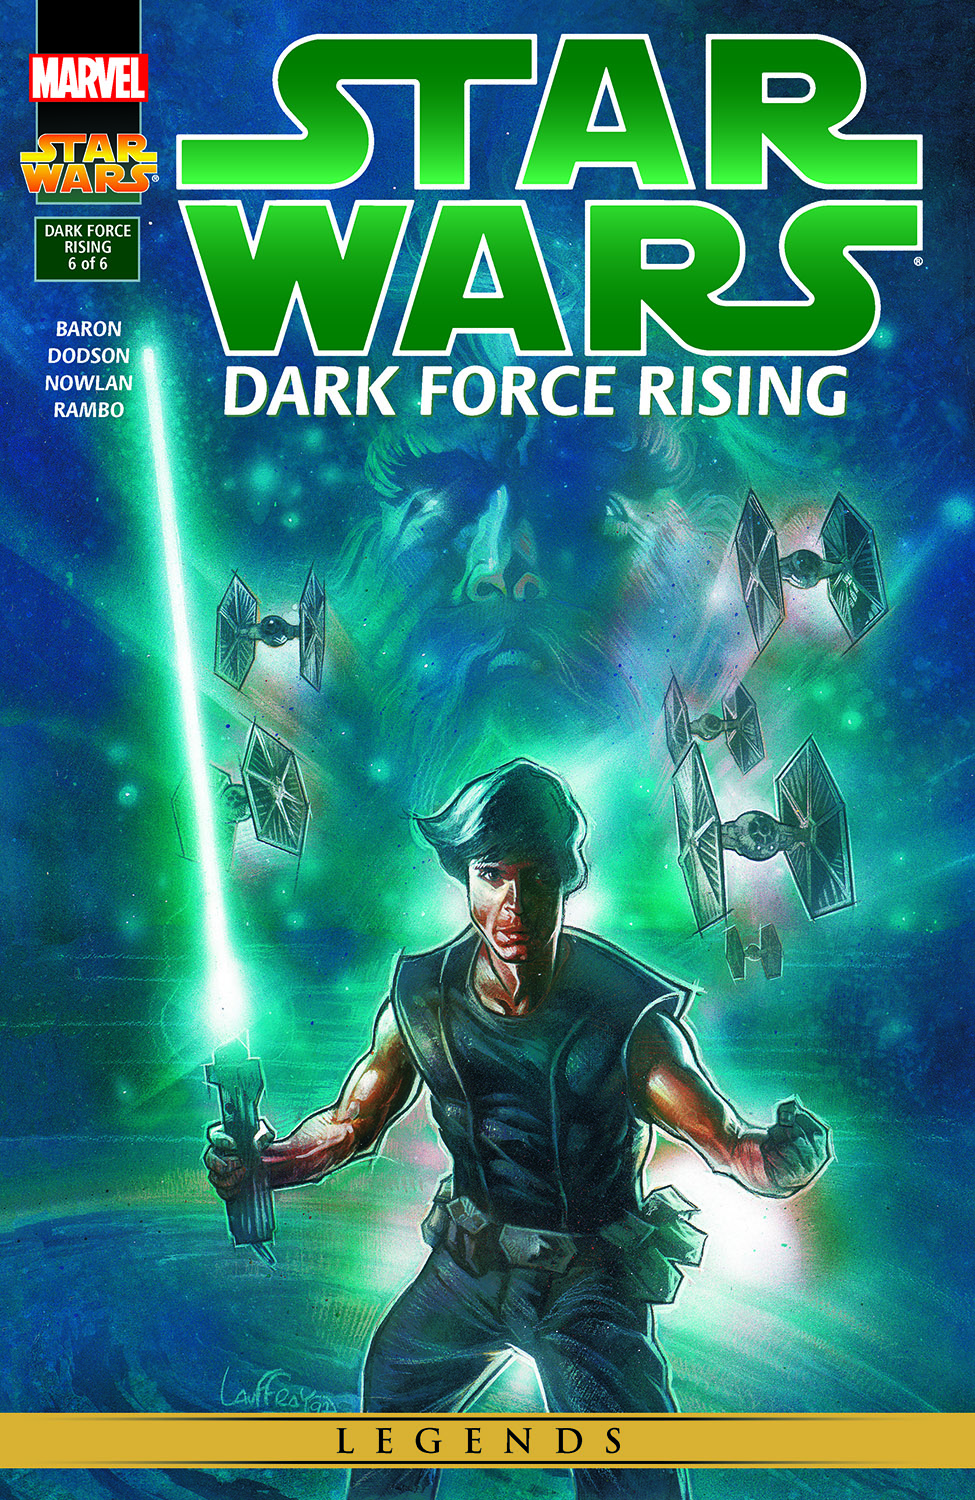 Star Wars: Dark Force Rising (1997) #6